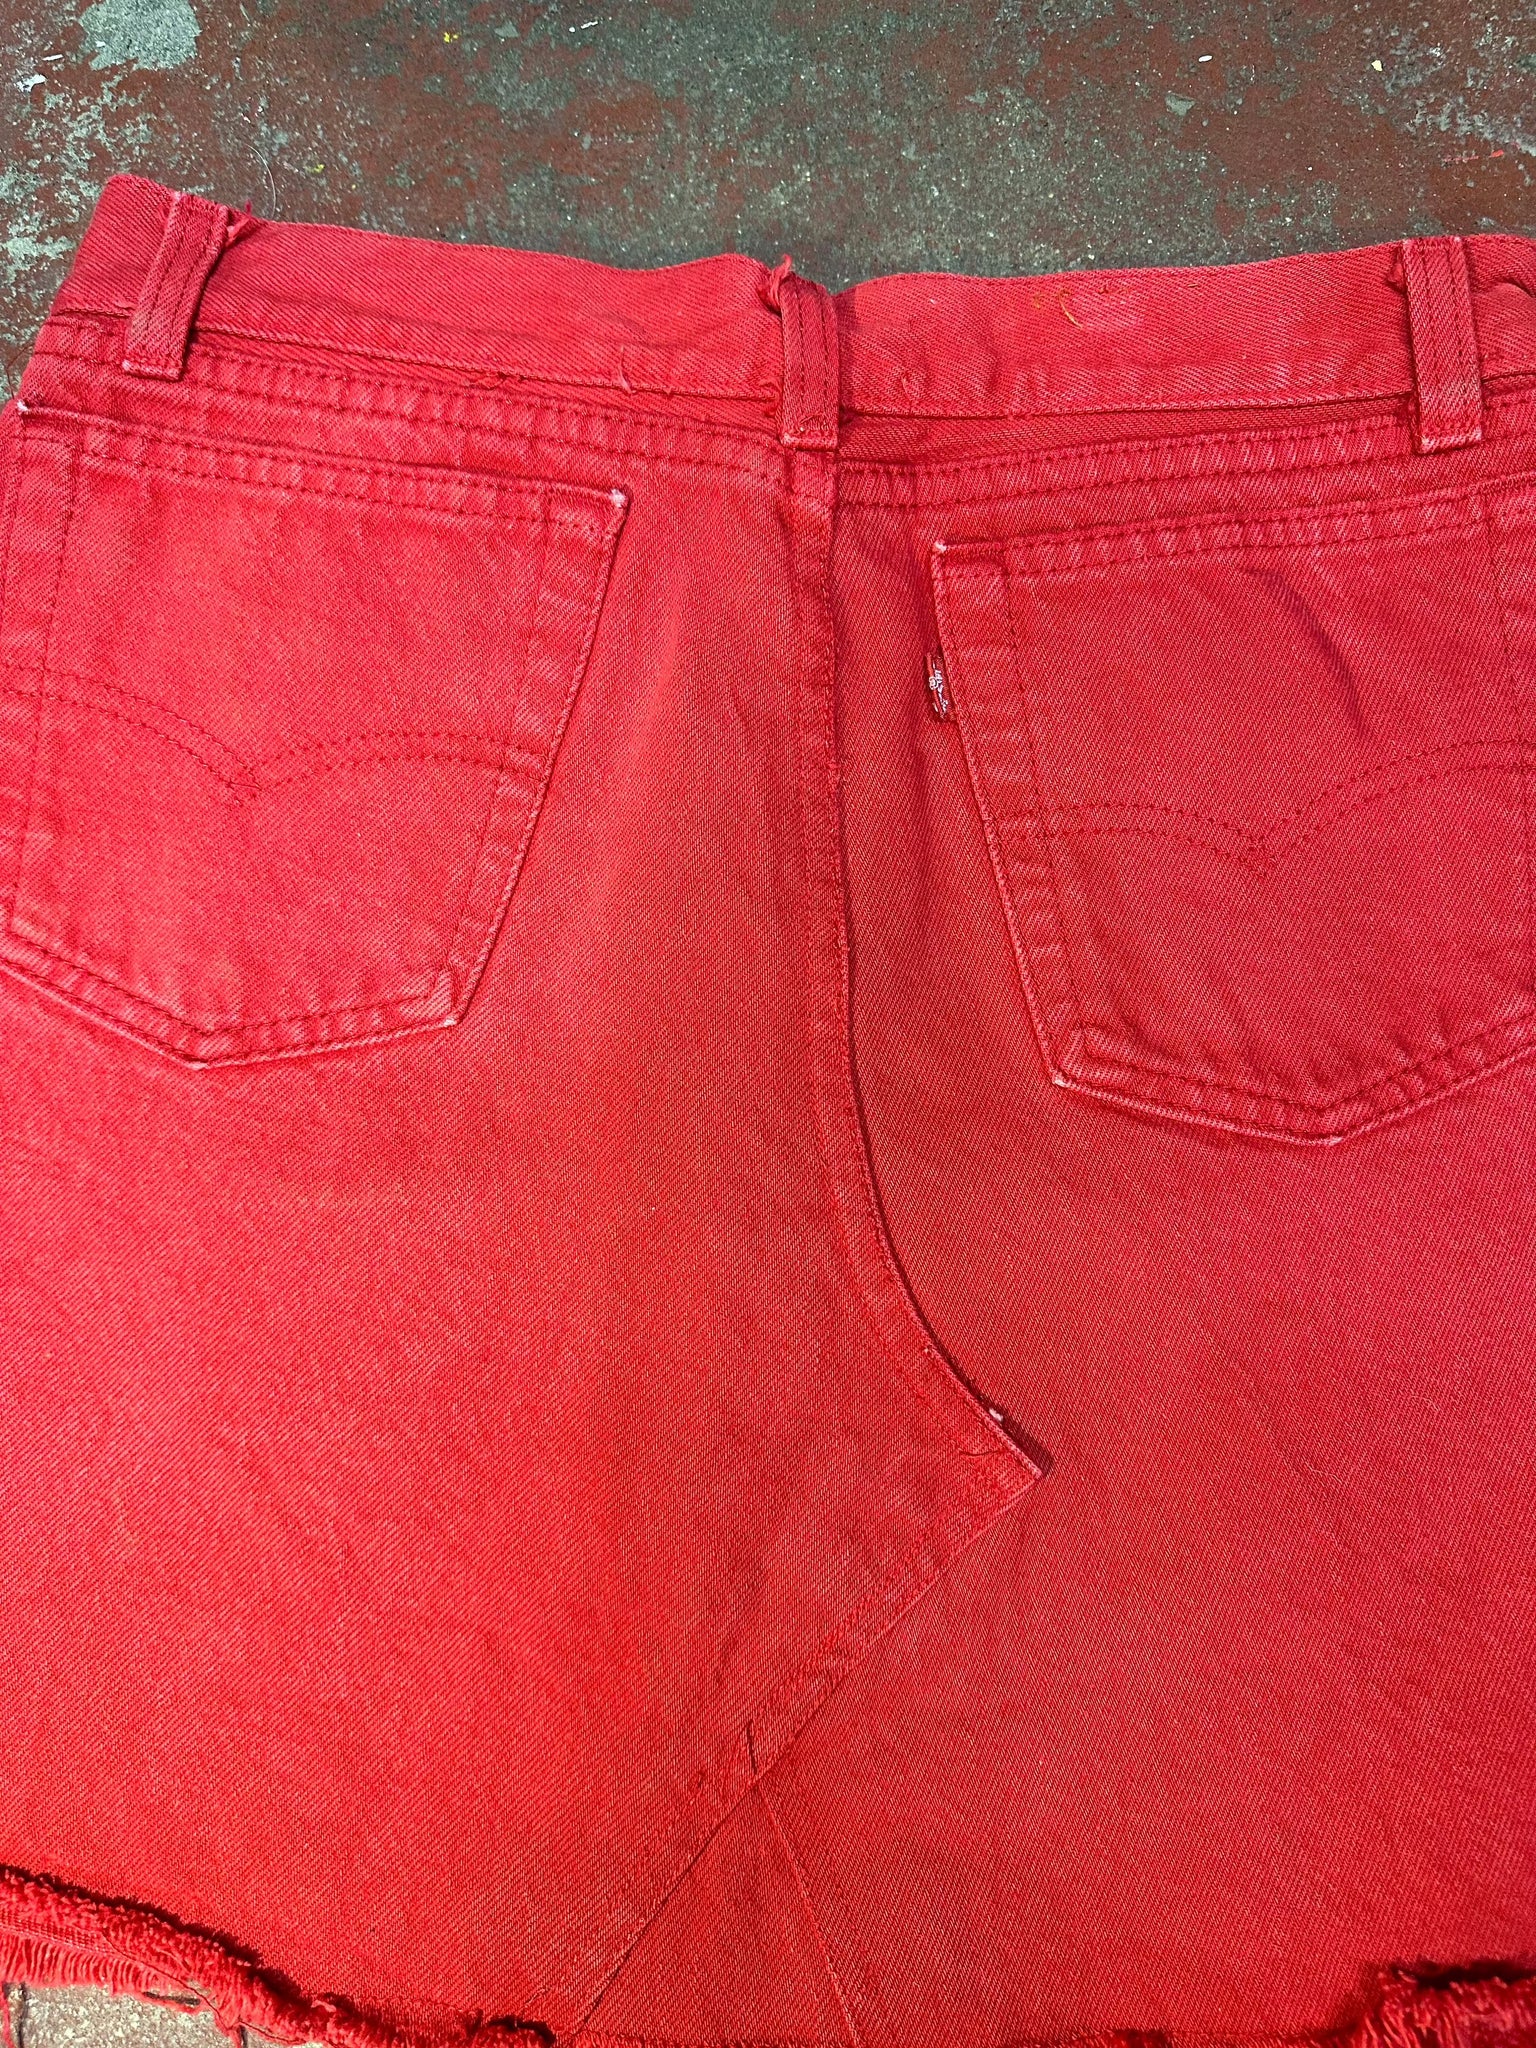 Vintage Levi Red Skirt (JYJ-196)